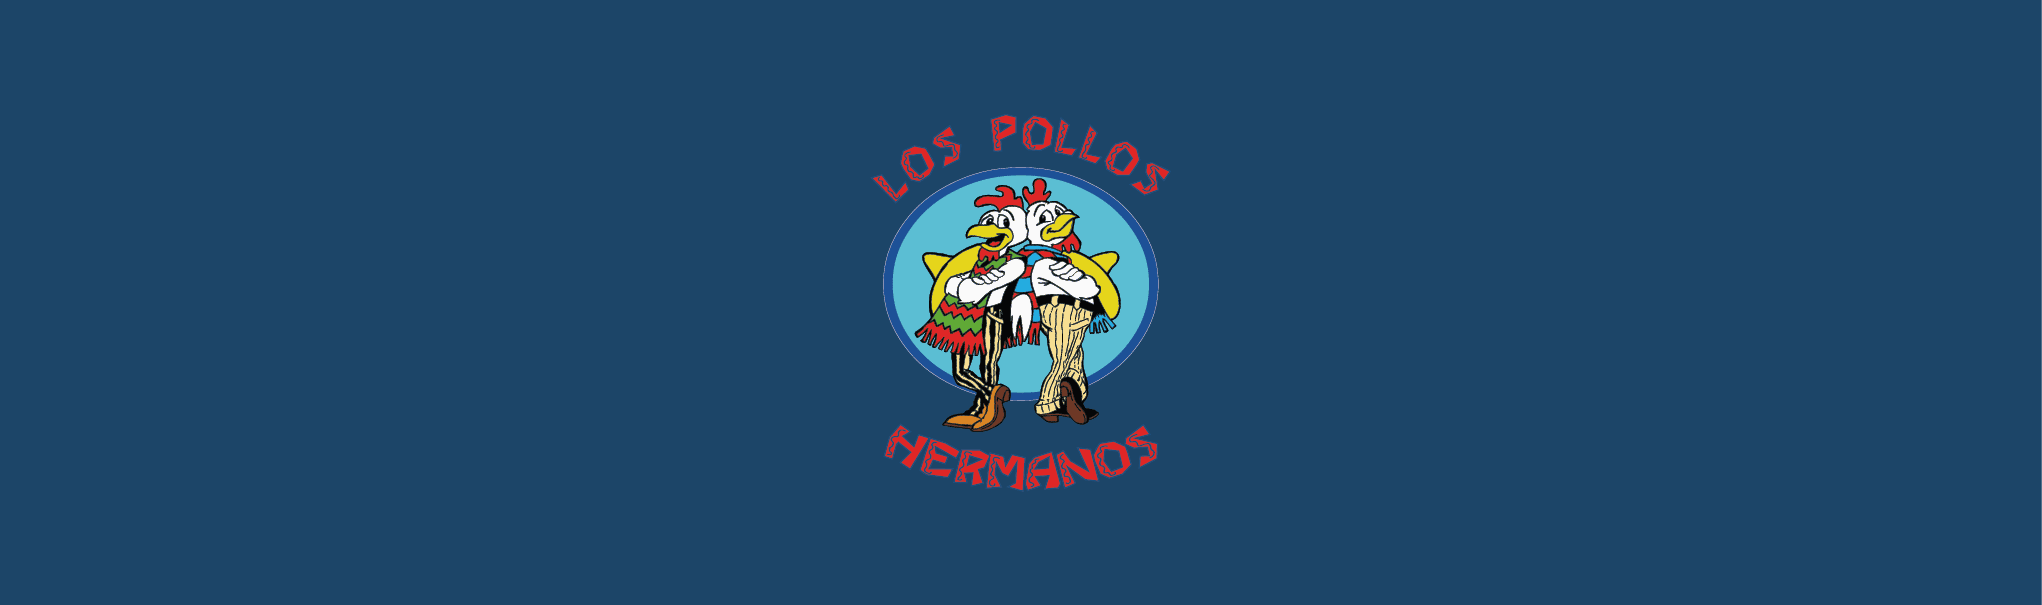 In questo articolo andremo a vedere la campagna marketing di Netflix basata su Los Pollos Hermanos